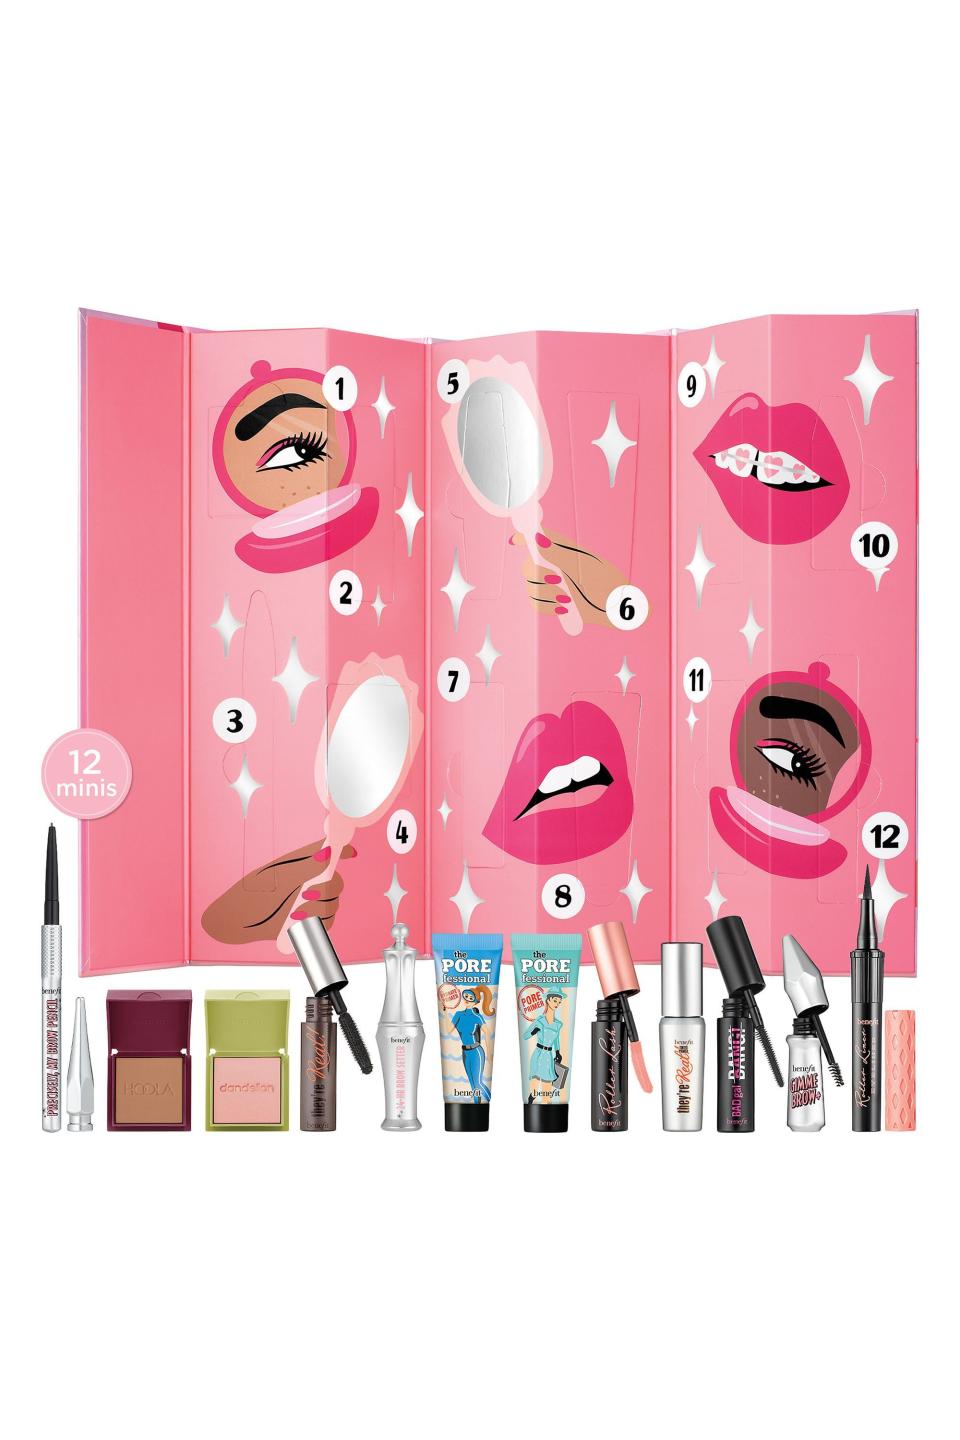 5) Shake Your Beauty Holiday Advent Calendar Makeup Set